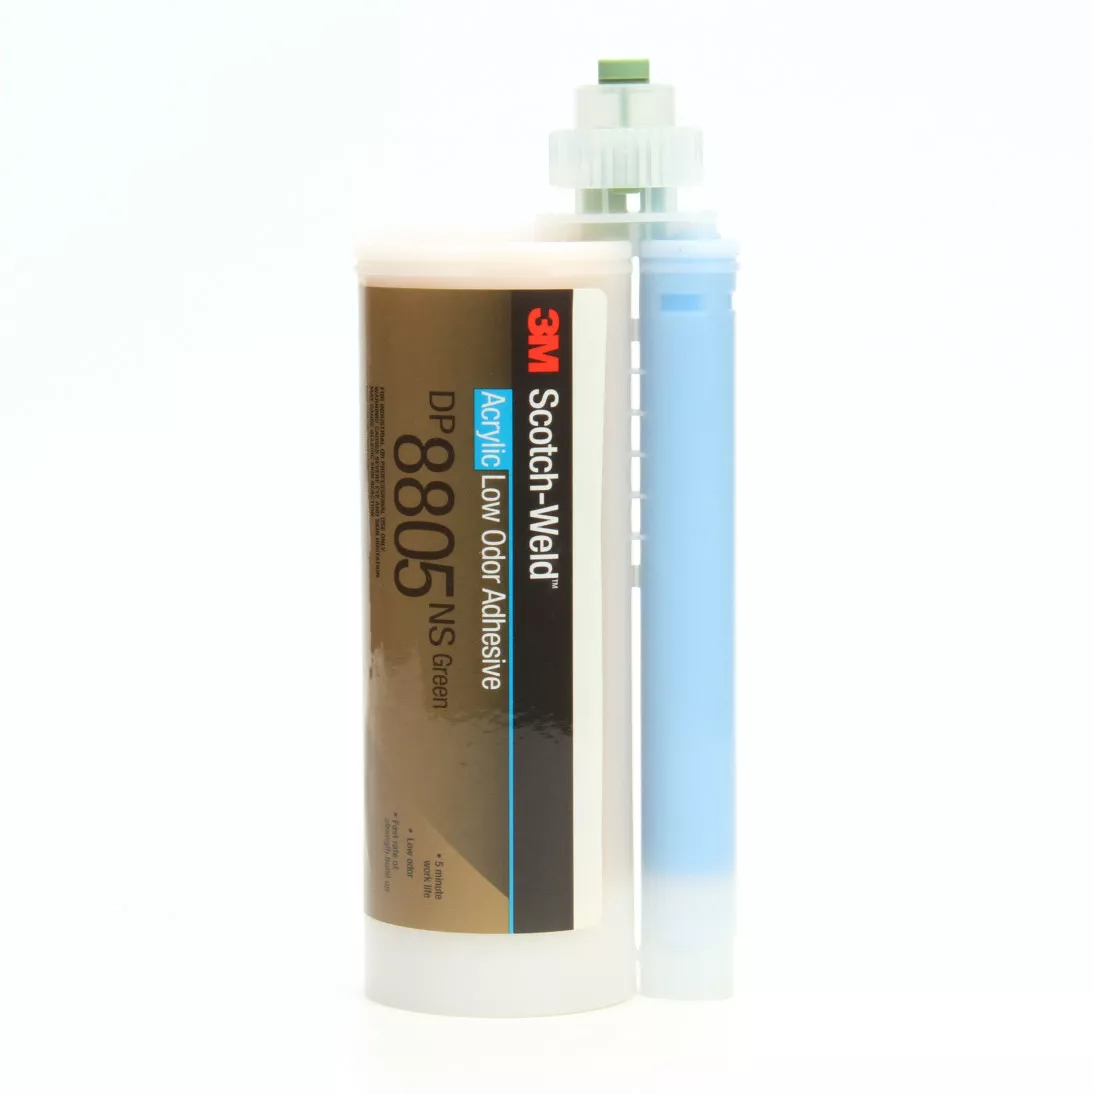 3M™ Scotch-Weld™ Low Odor Acrylic Adhesive DP8805NS, Green, 490 mL
Duo-Pak, 6/case